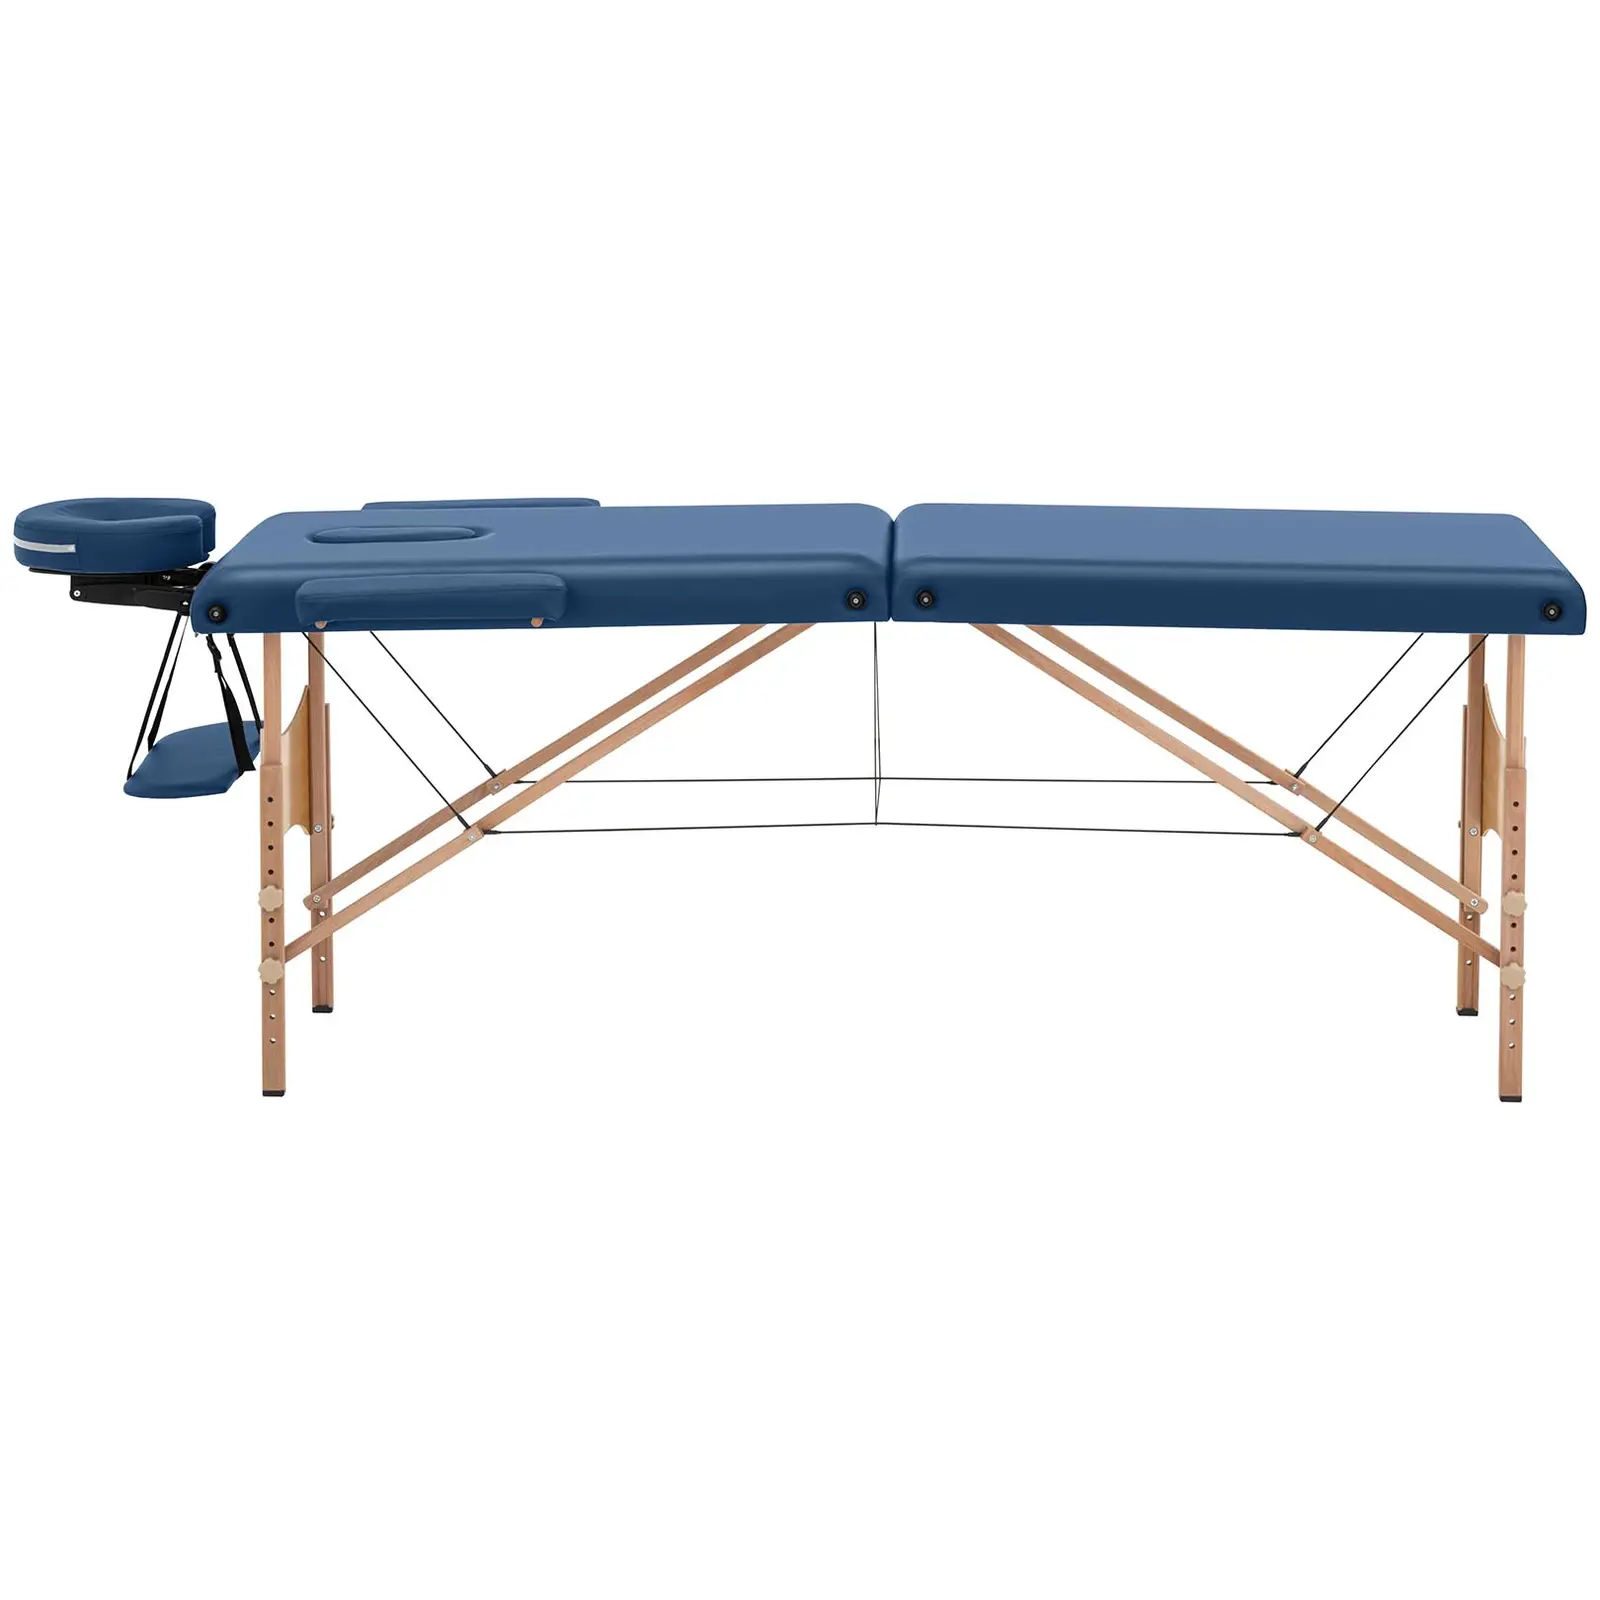 Hopfällbar massagebänk - 185 x 60 x 63-86 cm - 227 kg - Blå